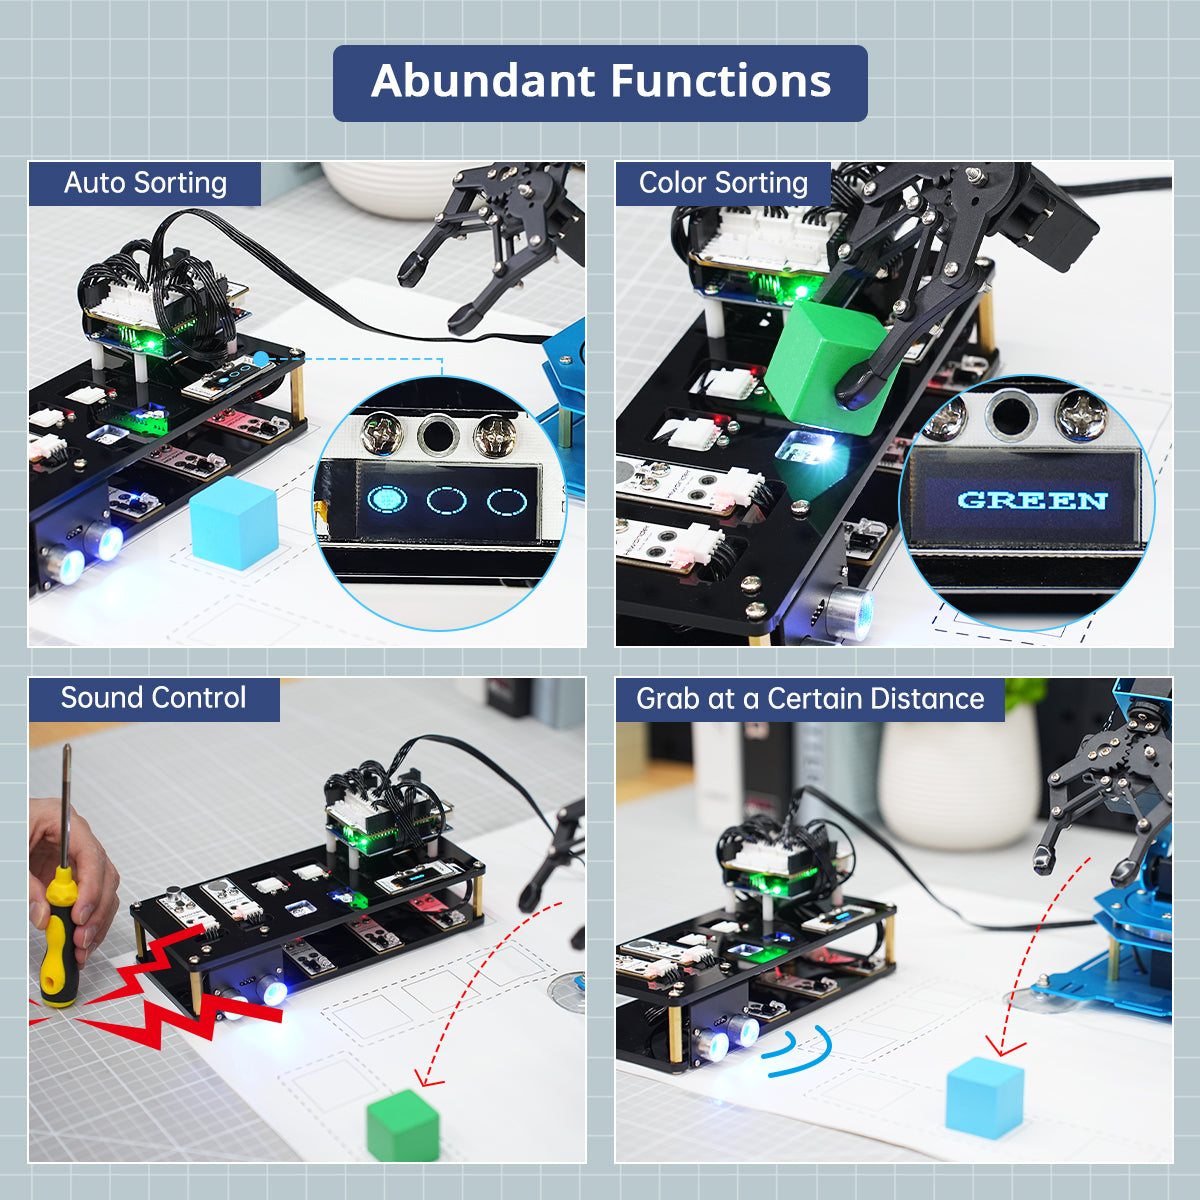 Hiwonder xArm UNO Robotic Arm with Arduino Secondary Development Senso